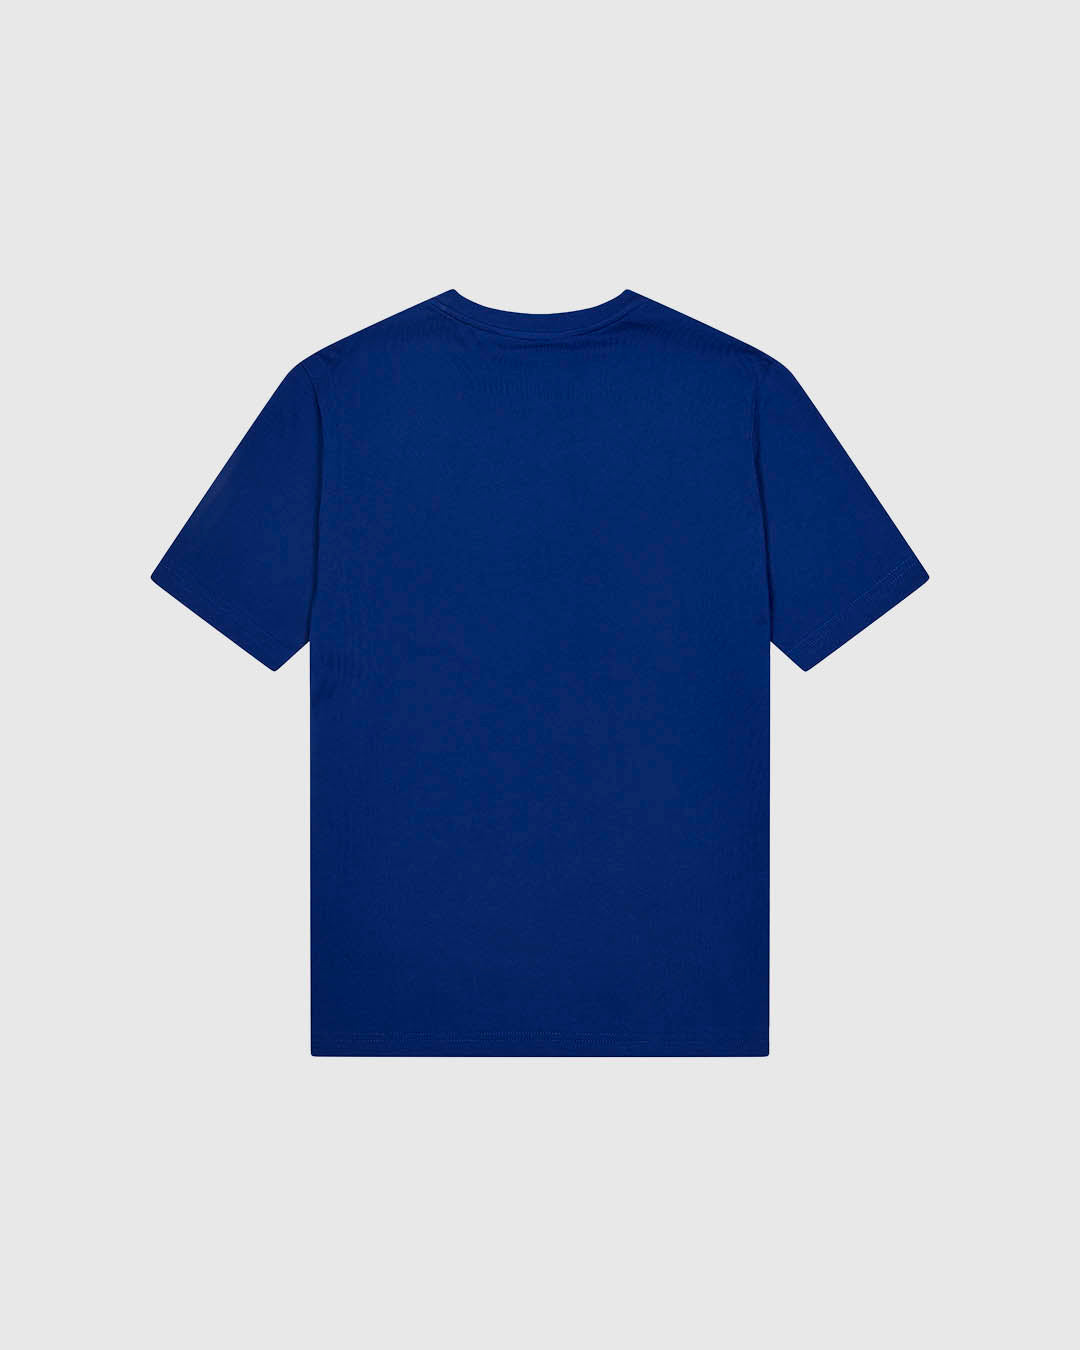 PFC: 003-1 - Women's T-shirt - Royal Blue